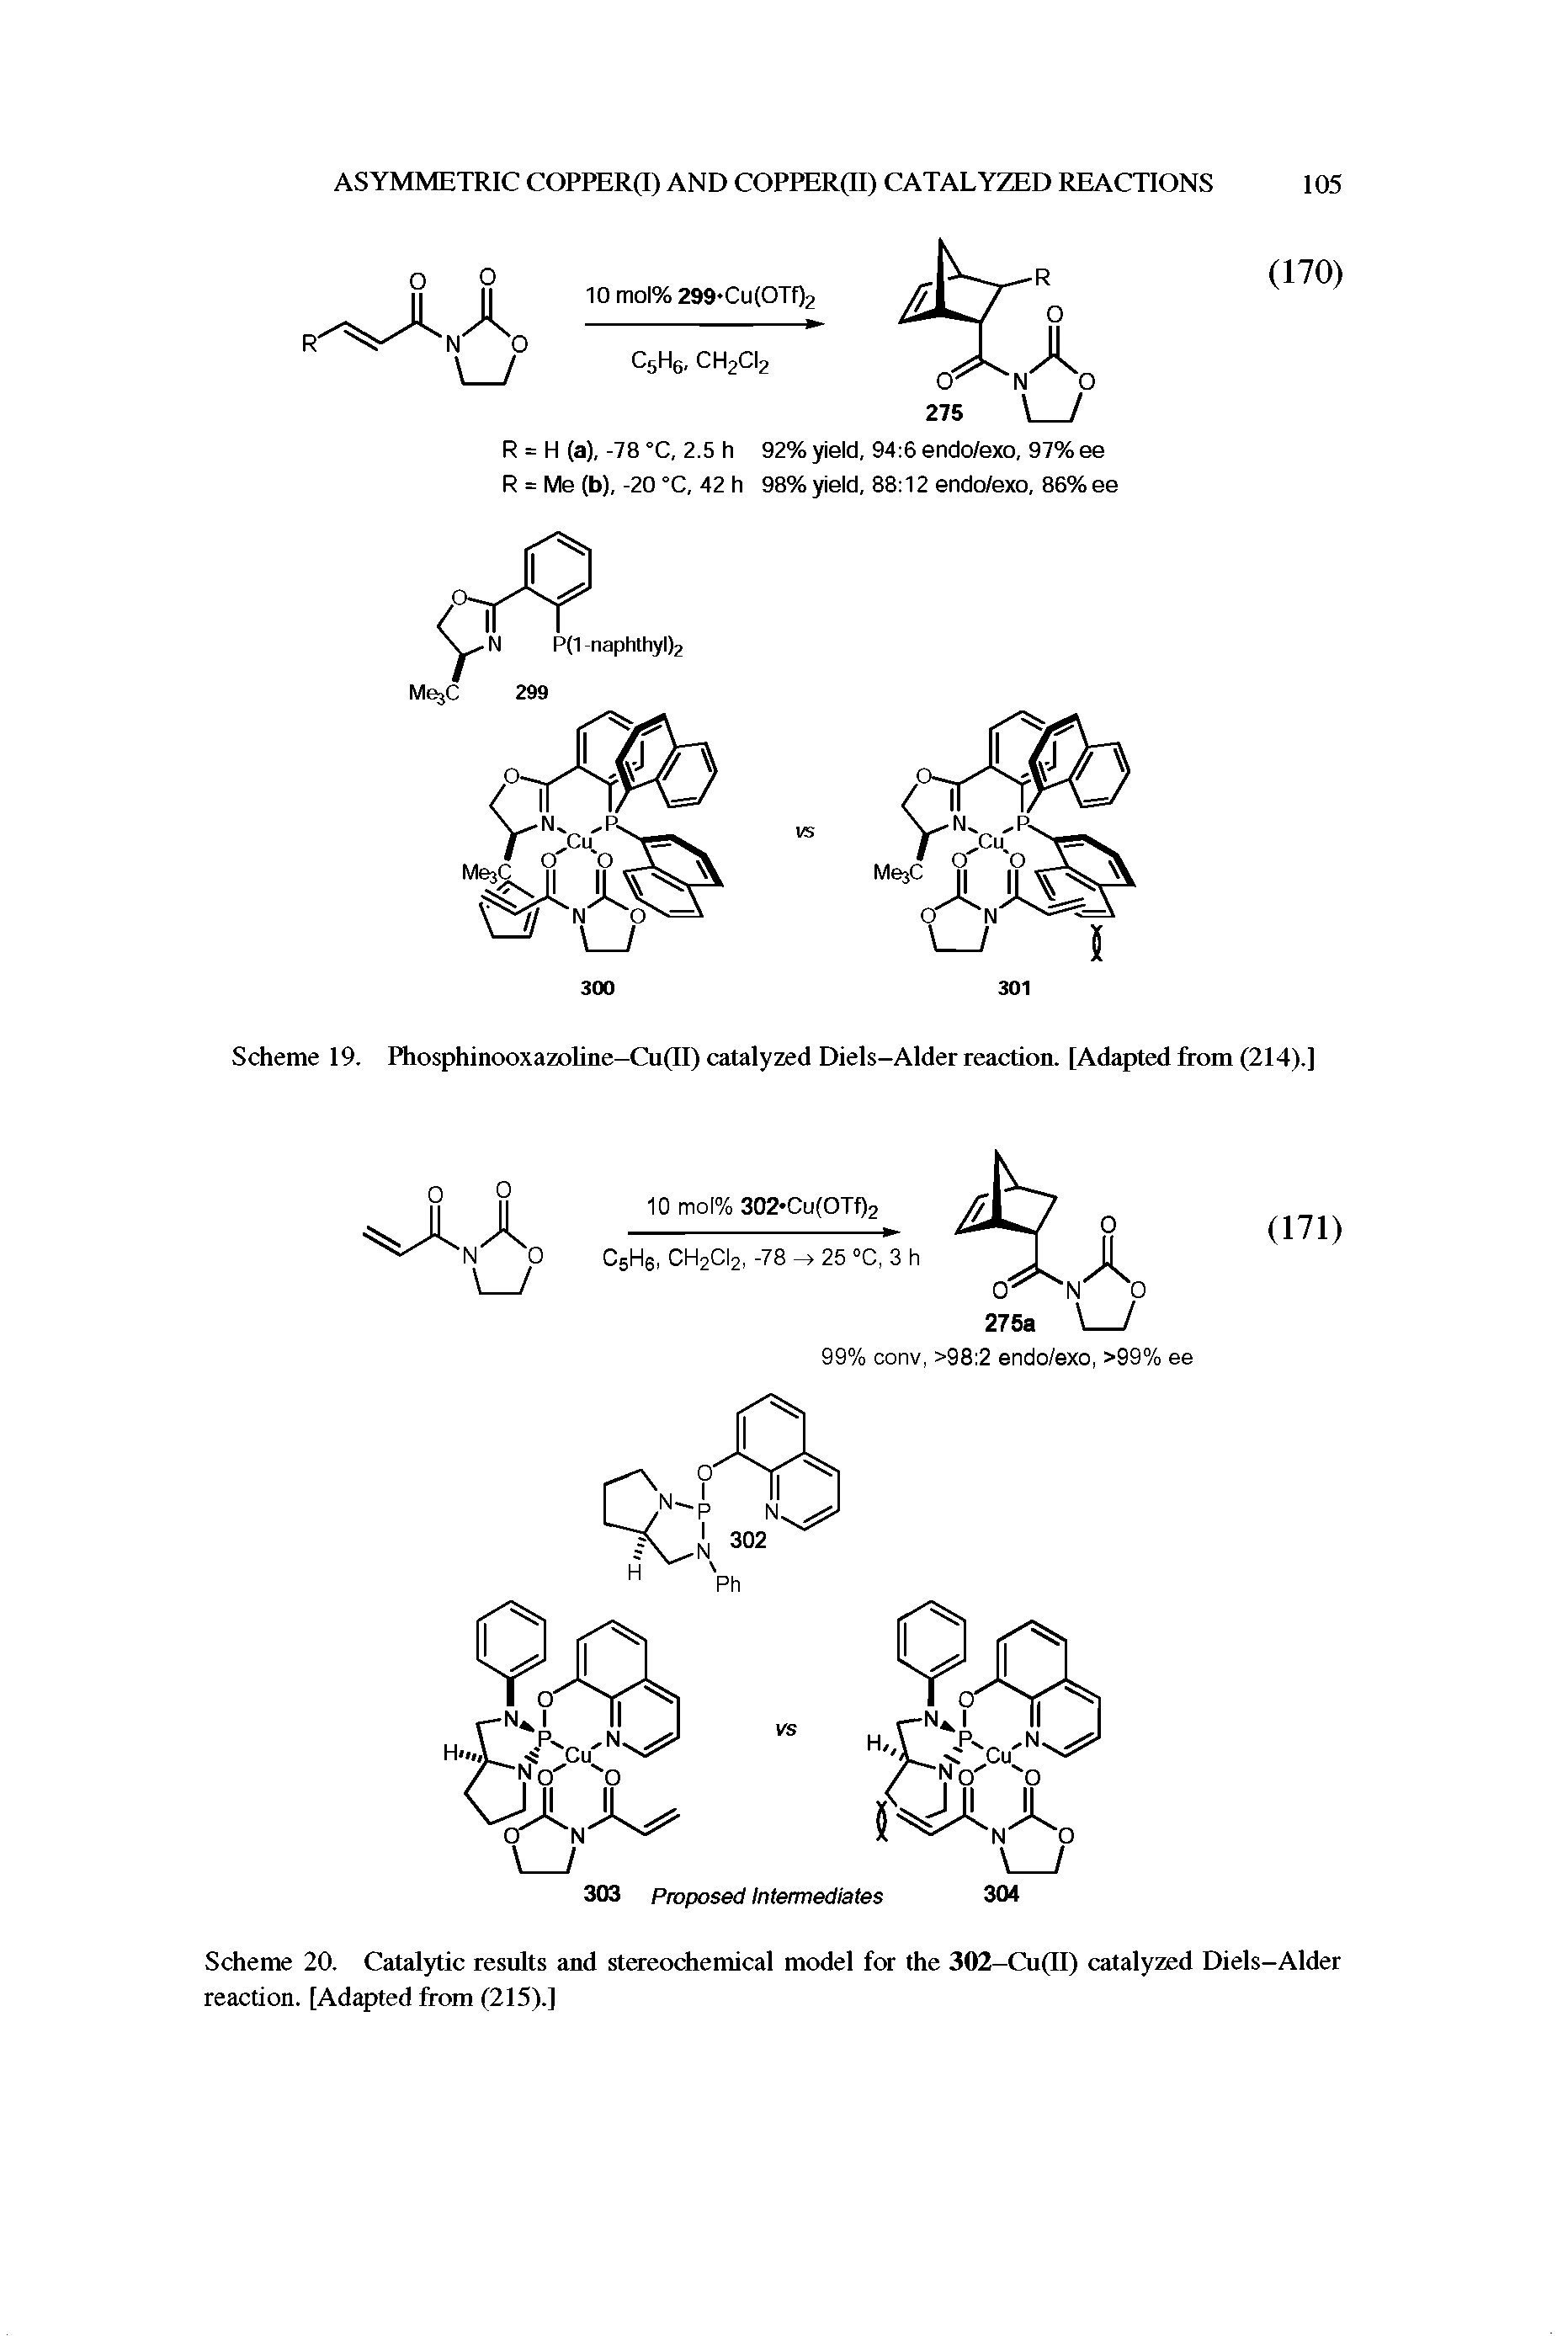 Scheme 19. Phosphinooxazoline-Cu ) catalyzed Diels-Alder reaction. [Adapted from (214).]...